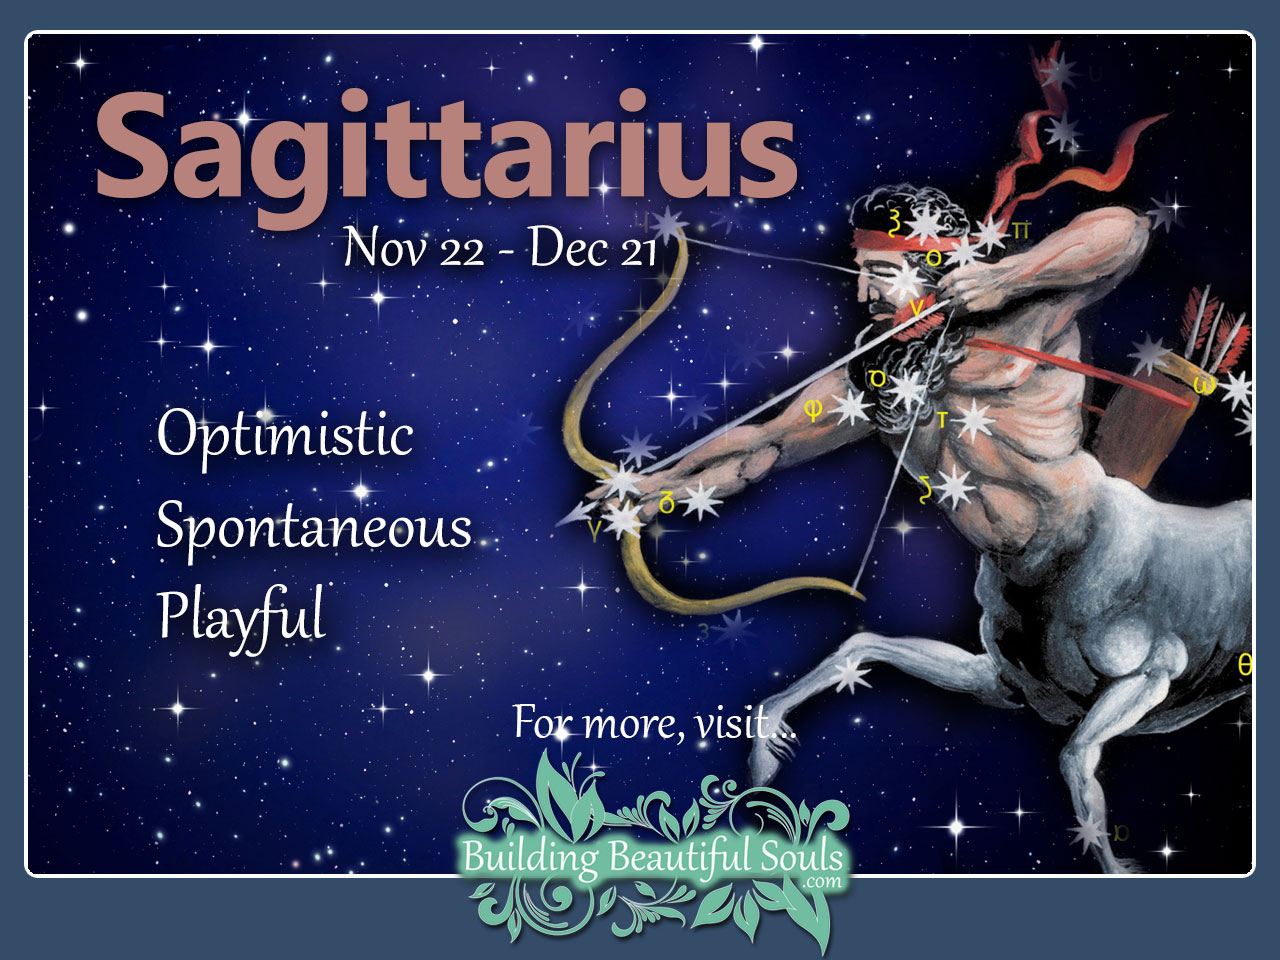 What is a Sagittarius guy like?